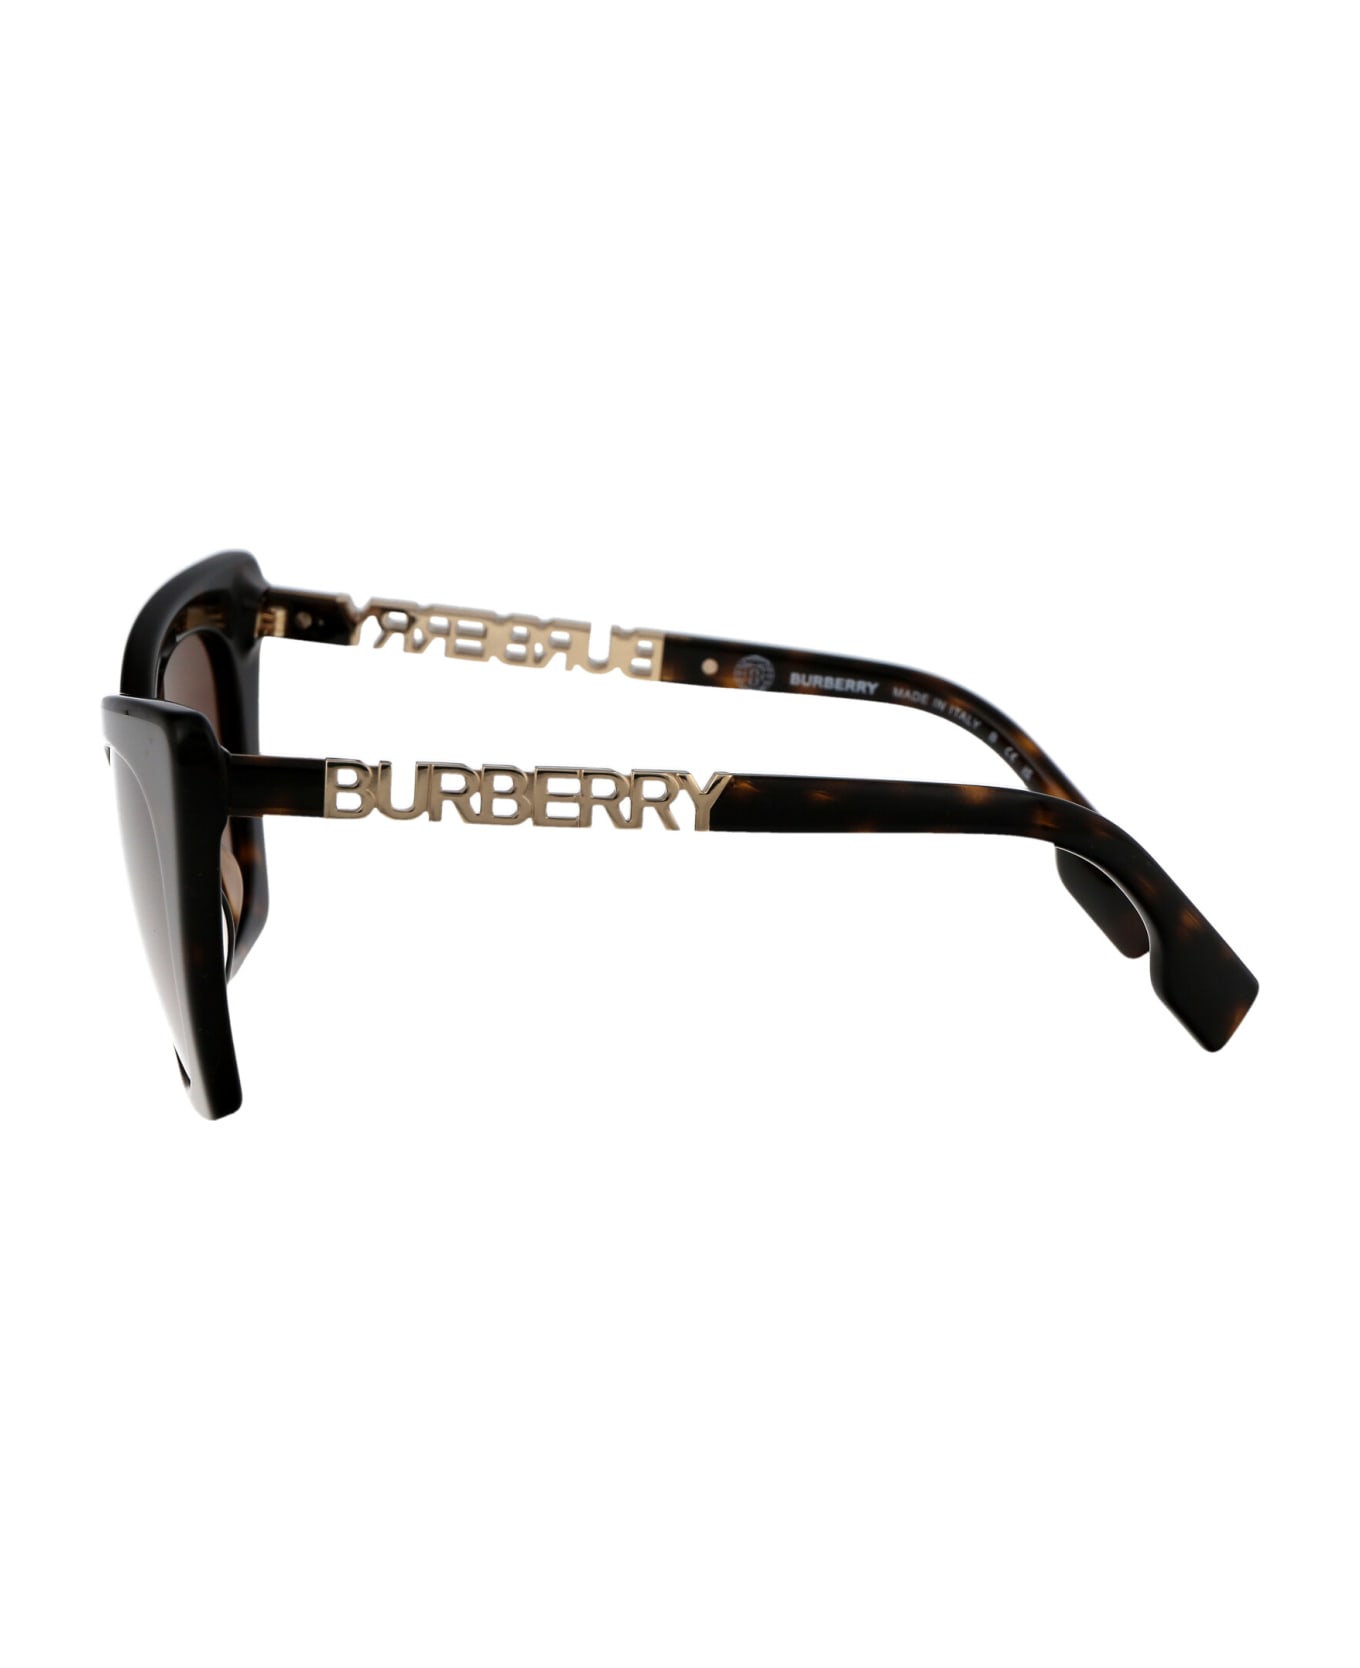 Burberry Eyewear Marianne Sunglasses - 300213 DARK HAVANA サングラス